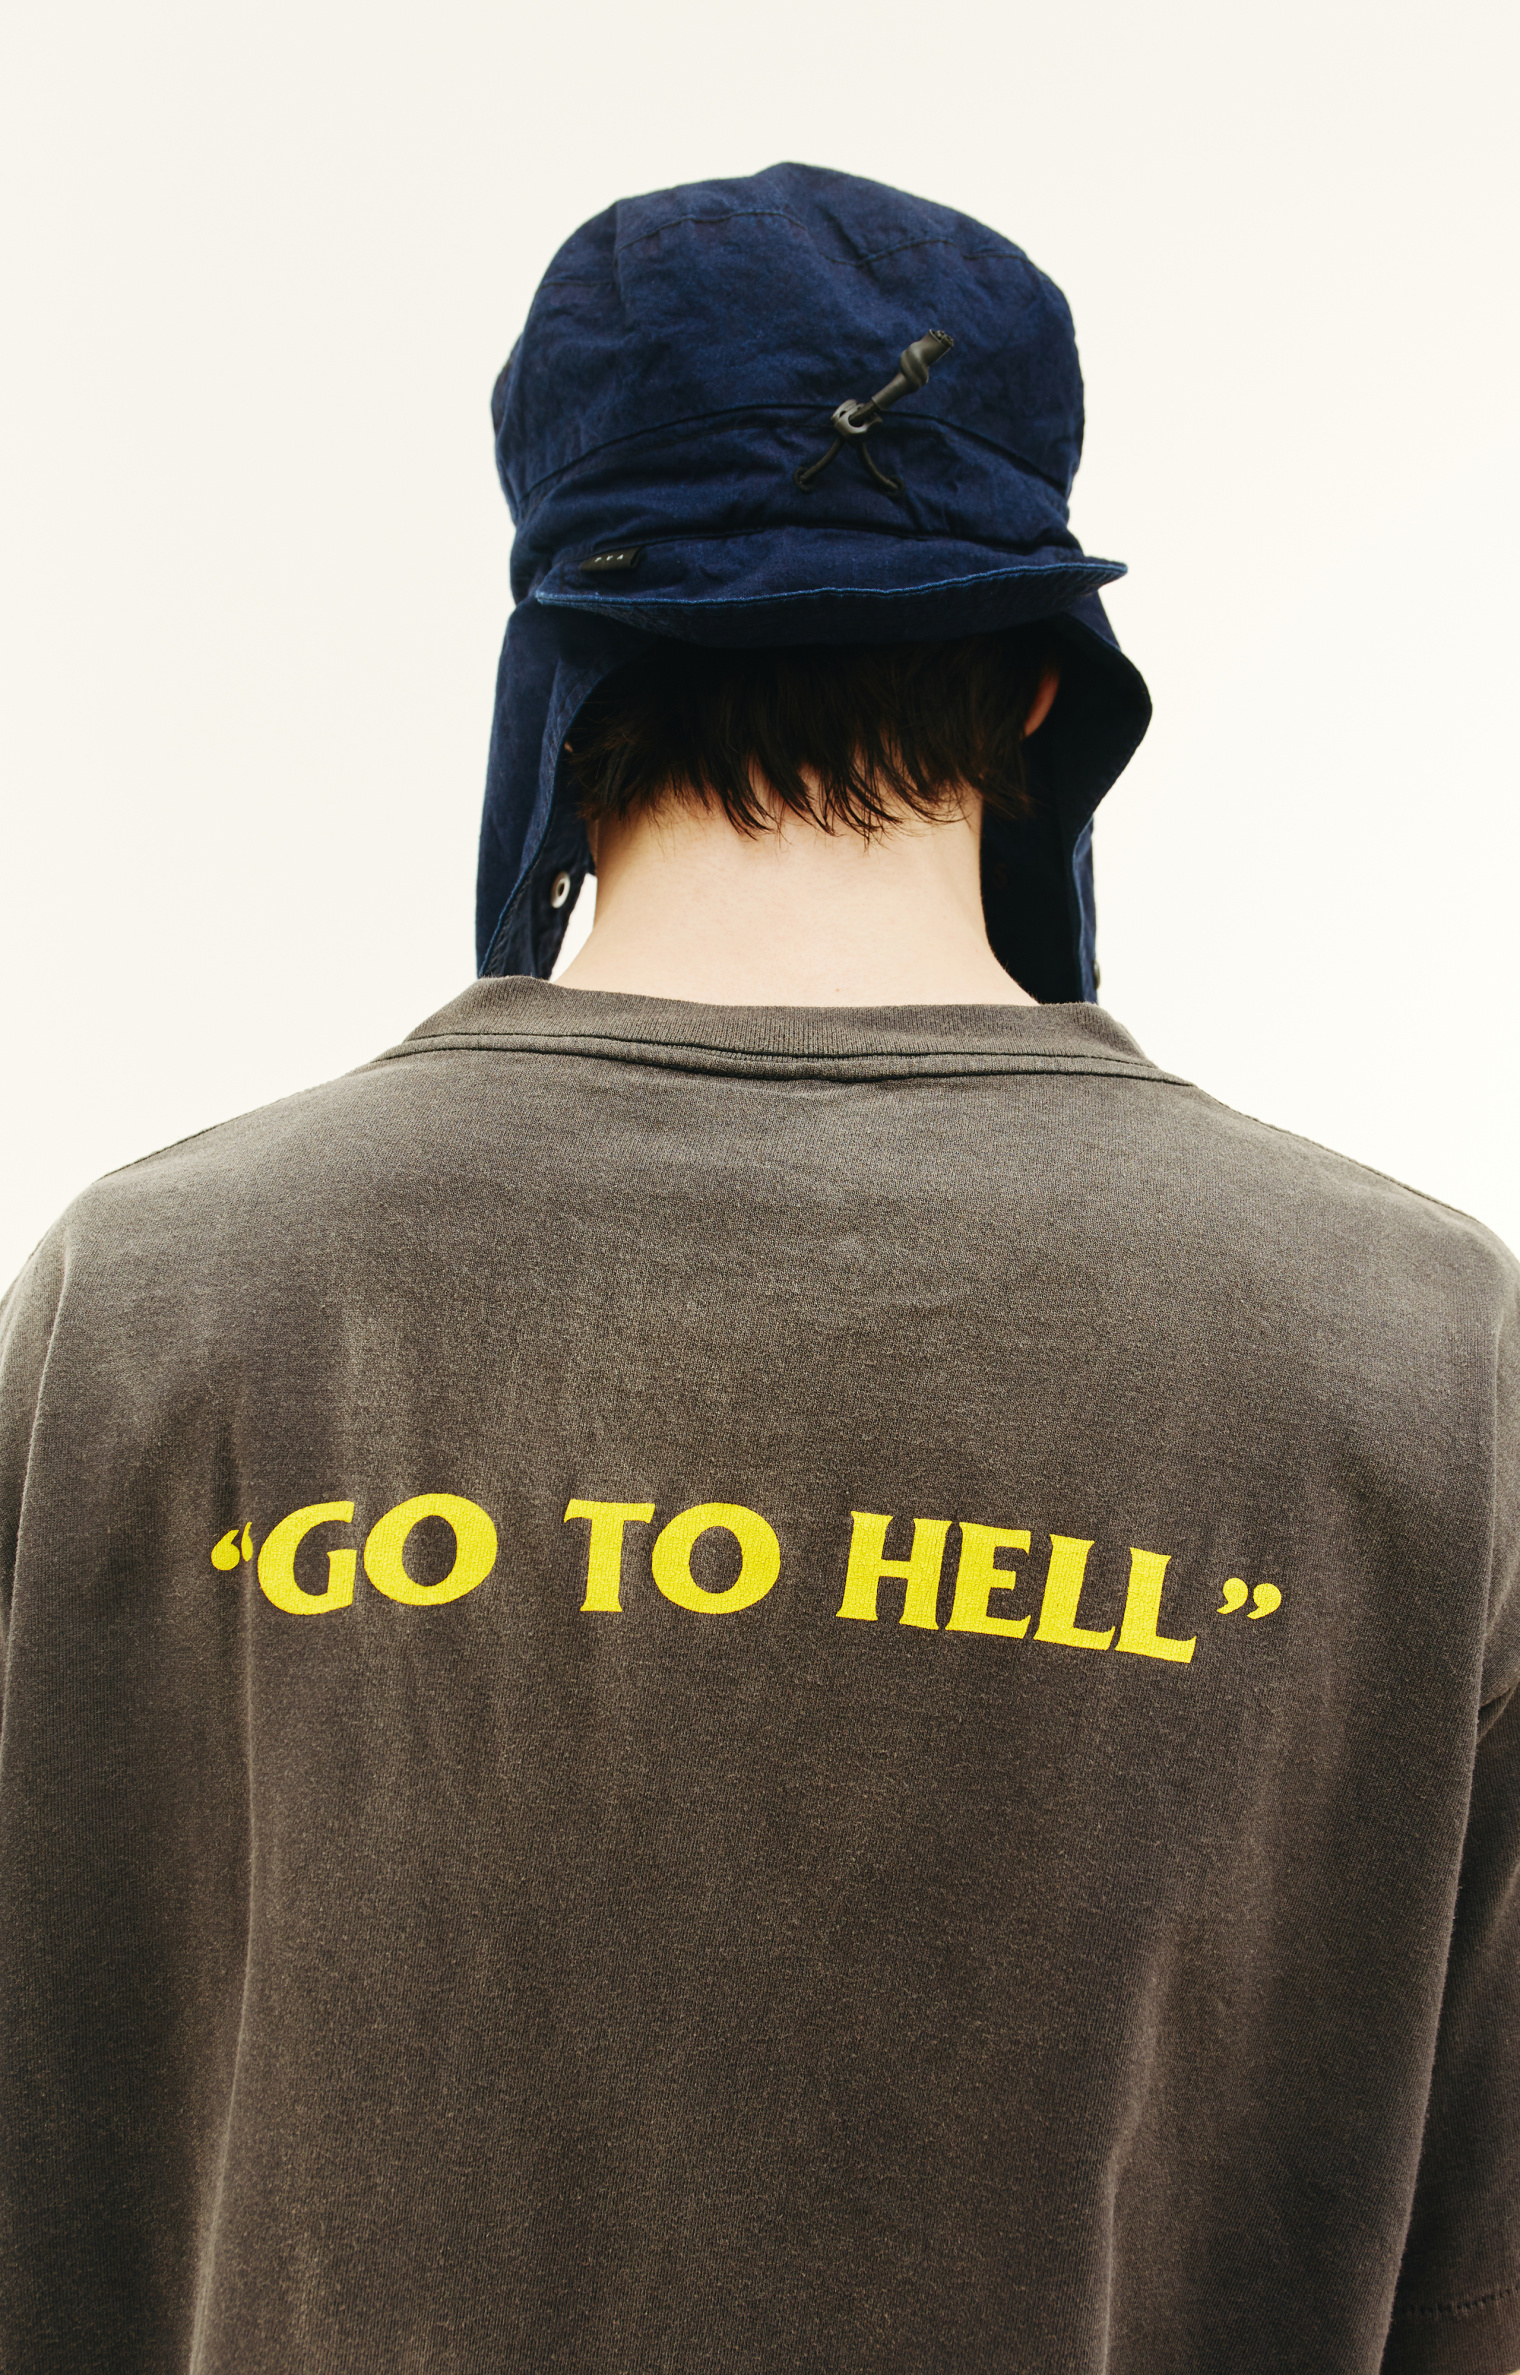 Saint Michael Выцветшая футболка Go to hell